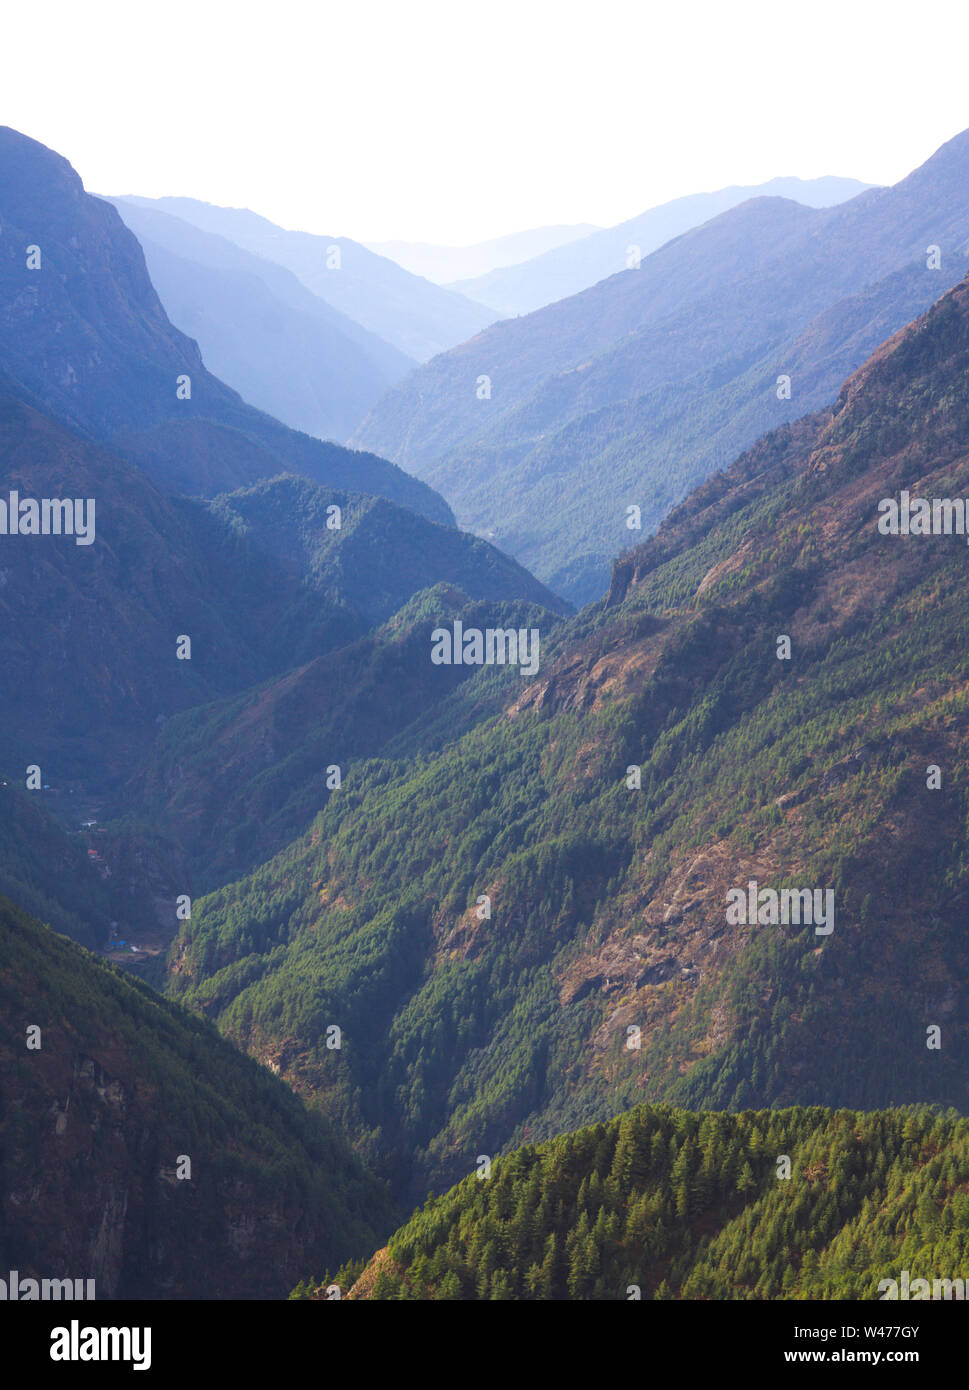 Ridges of the Himalaya foothills, Nepal Stock Photo